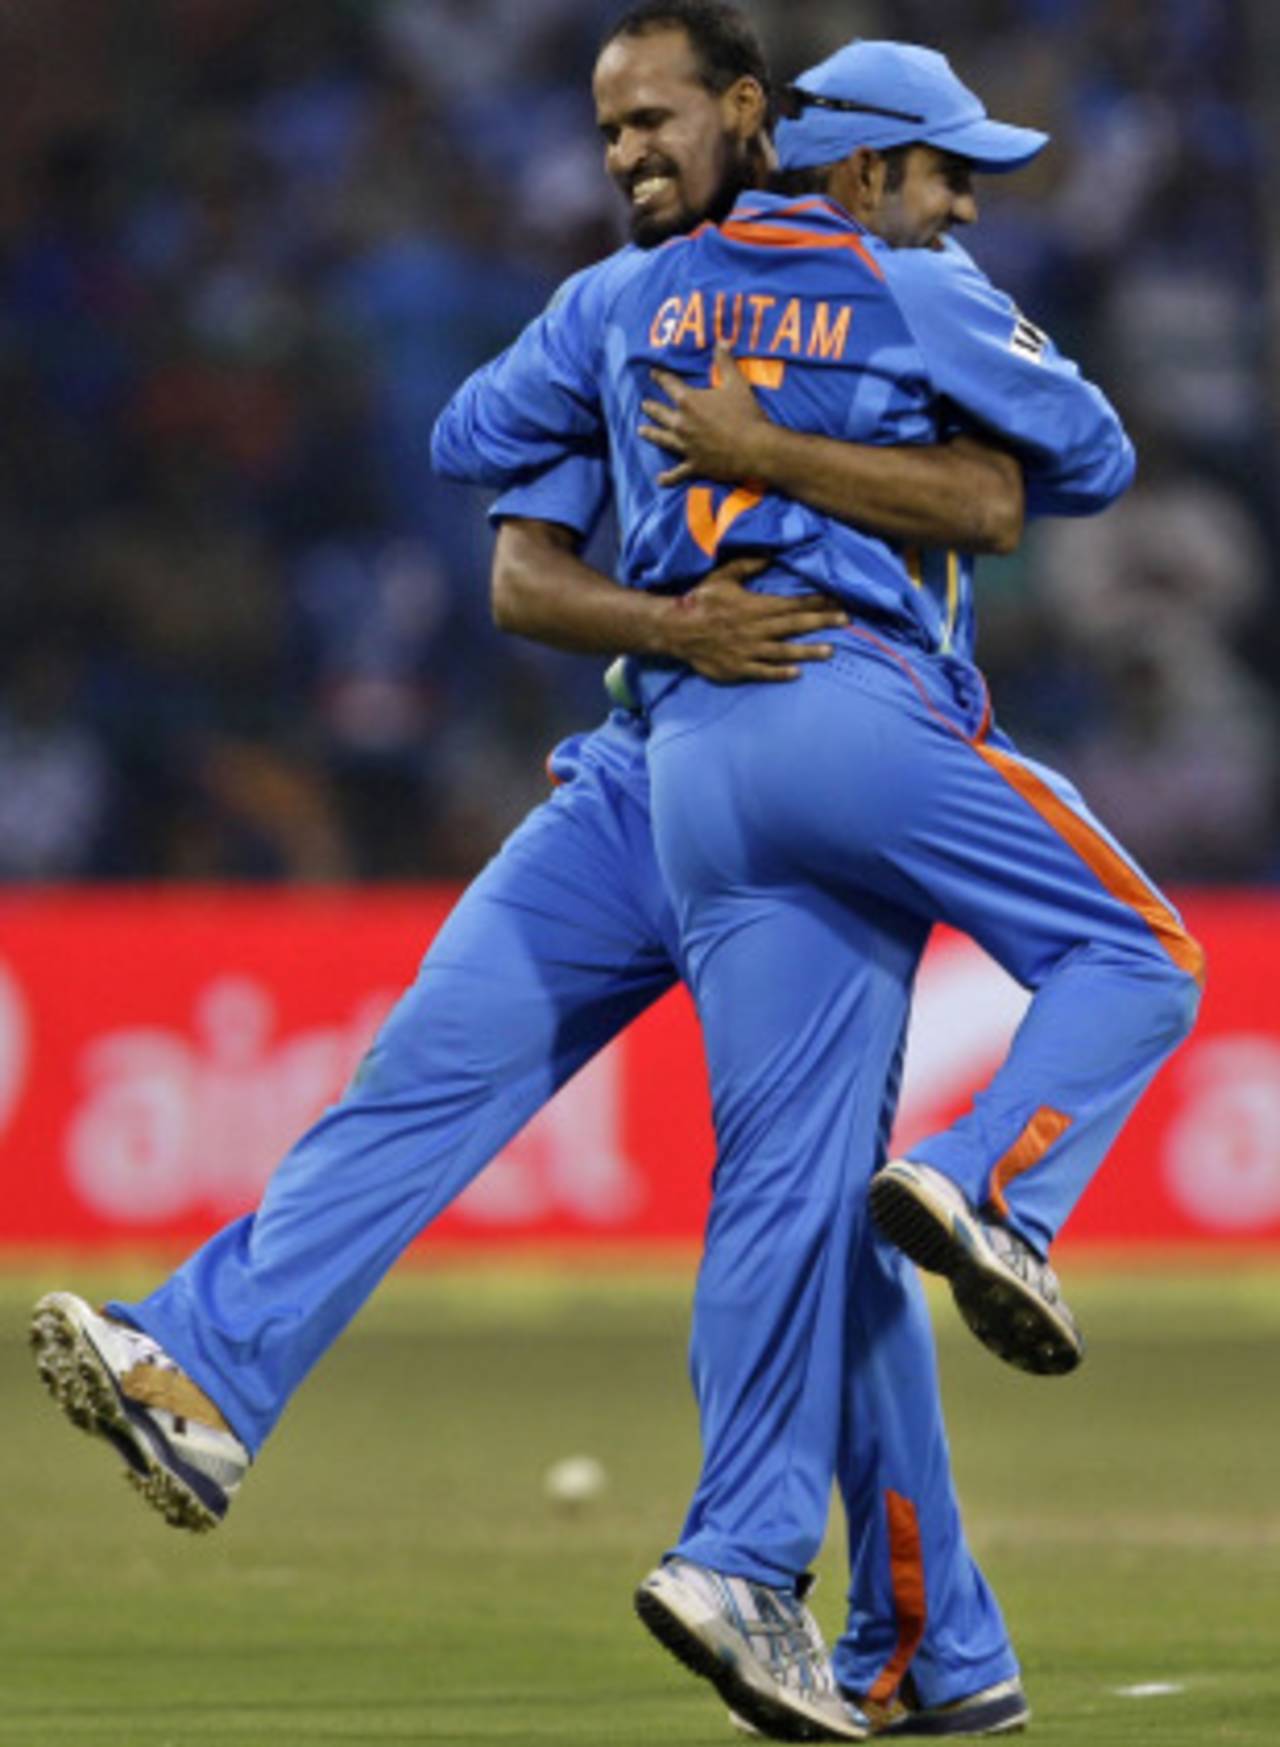 Yusuf Pathan and Gautam Gambhir celebrate the wicket of Kyle Mills, India v New Zealand, 4th ODI, Bangalore, December 7, 2010